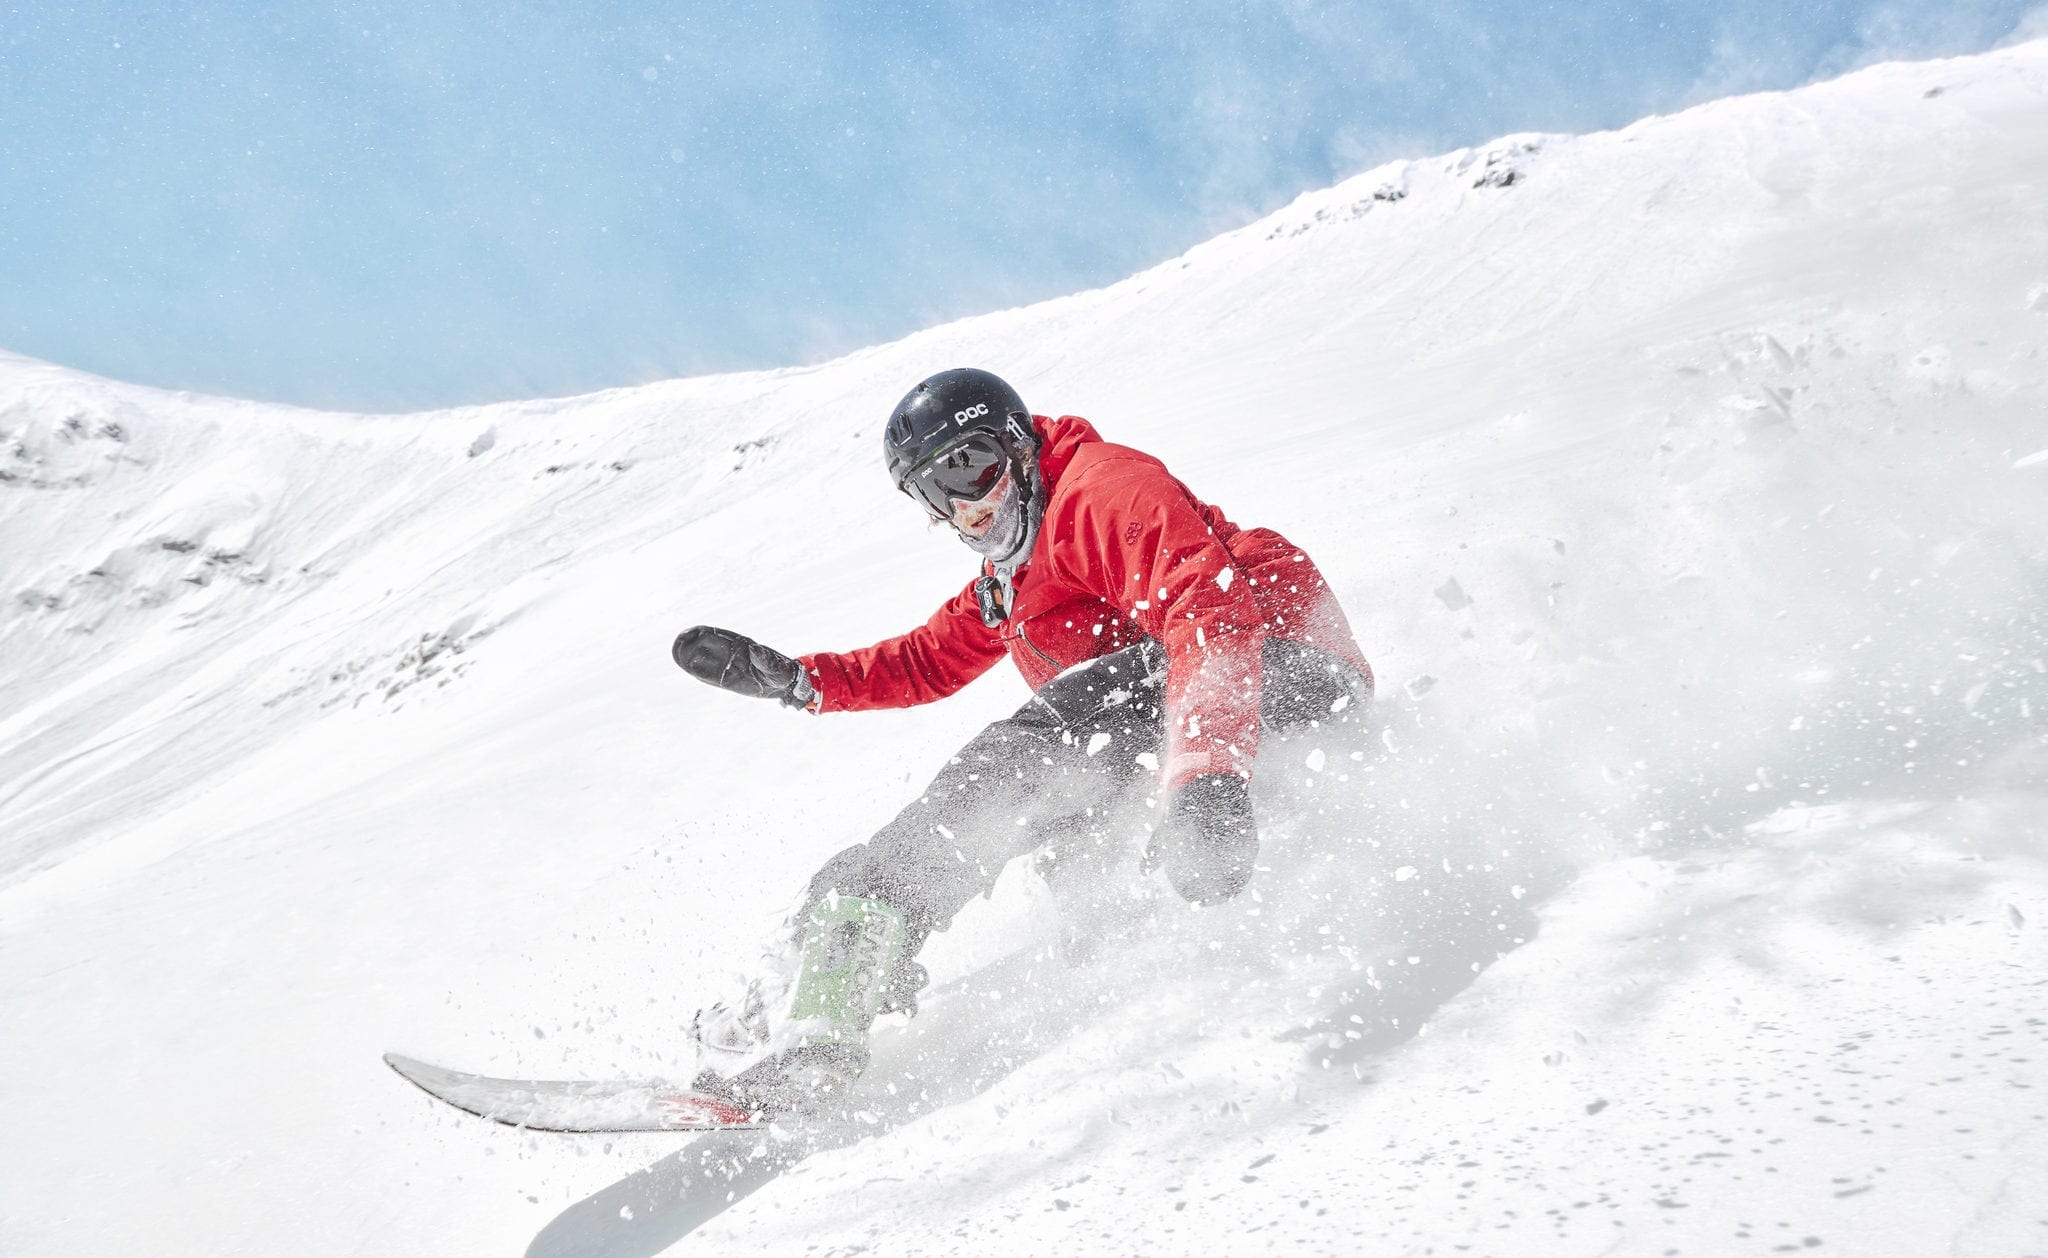 A snowboarding riding powder at Breckenridge Ski Resort.